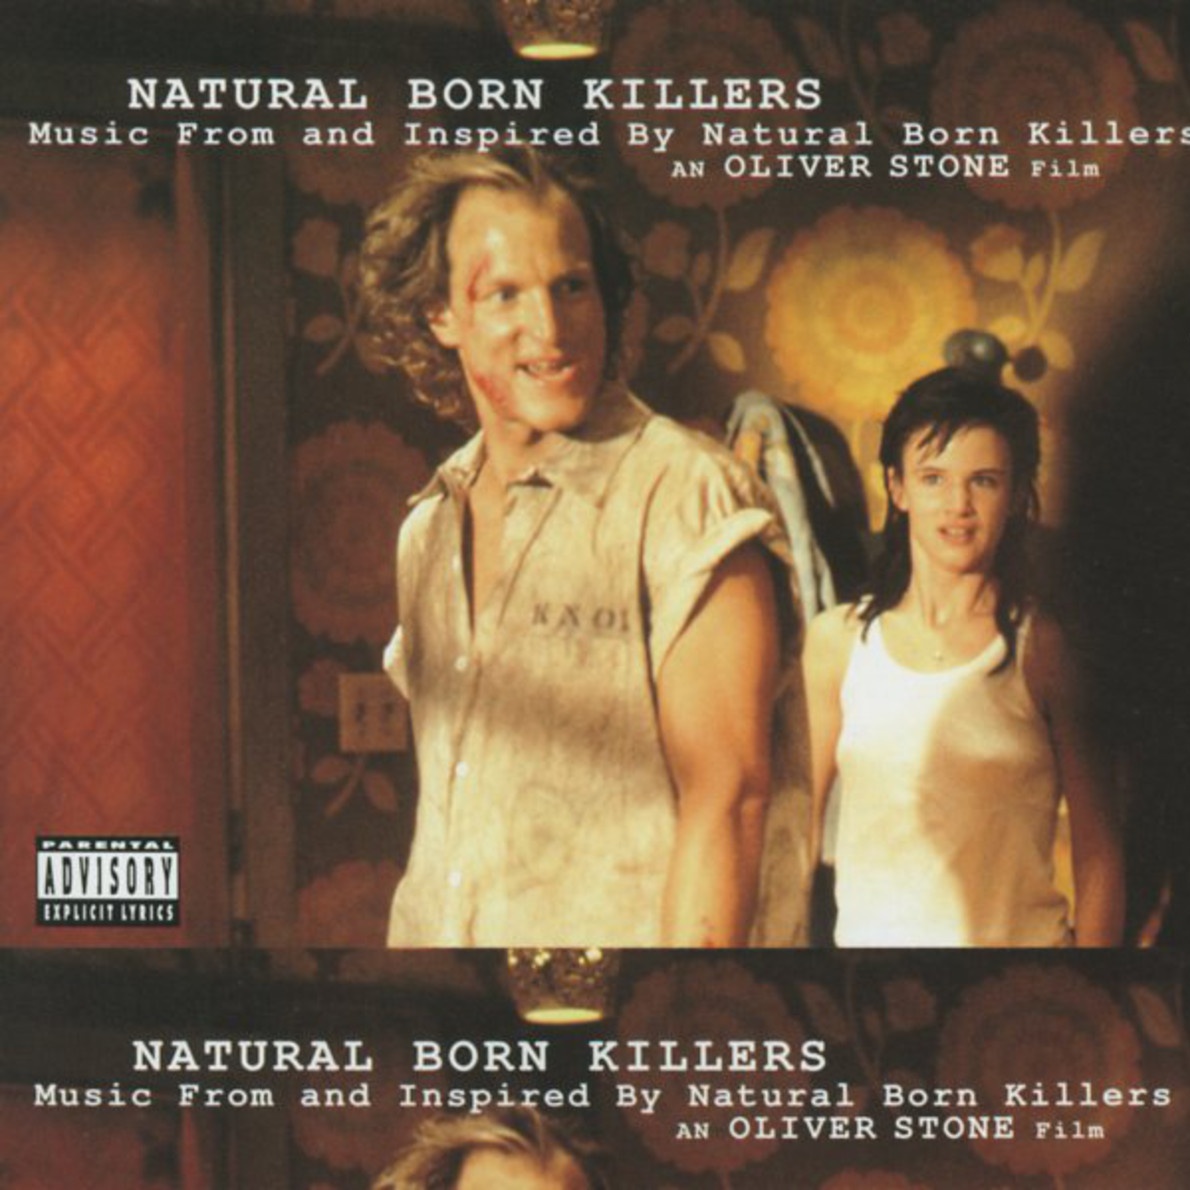 Sex Is Violent - From "Natural Born Killers" Soundtrack